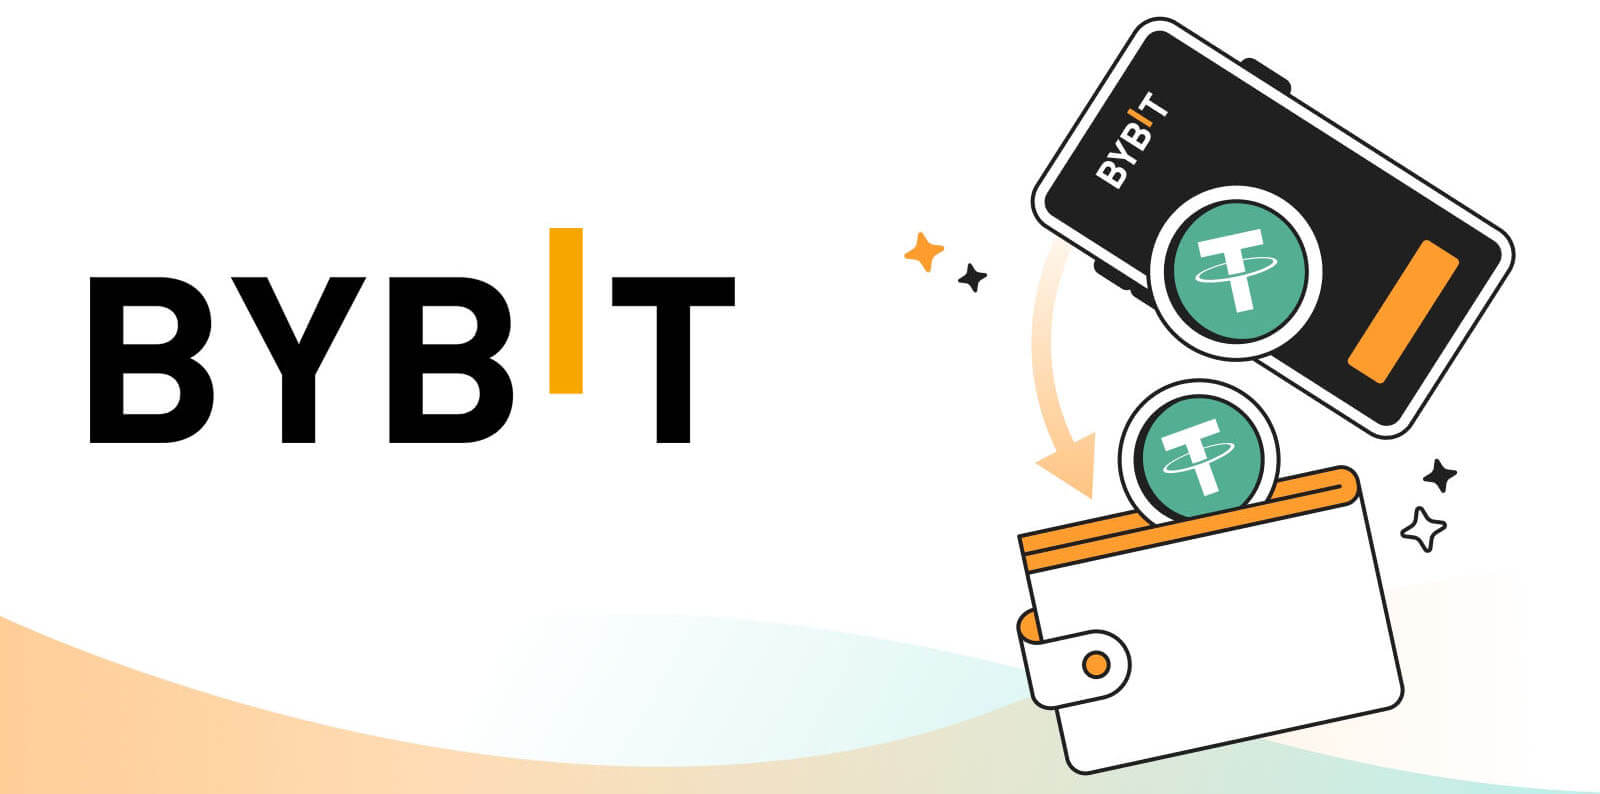 Bybit Deposit: How to Deposit Money and Payment Methods